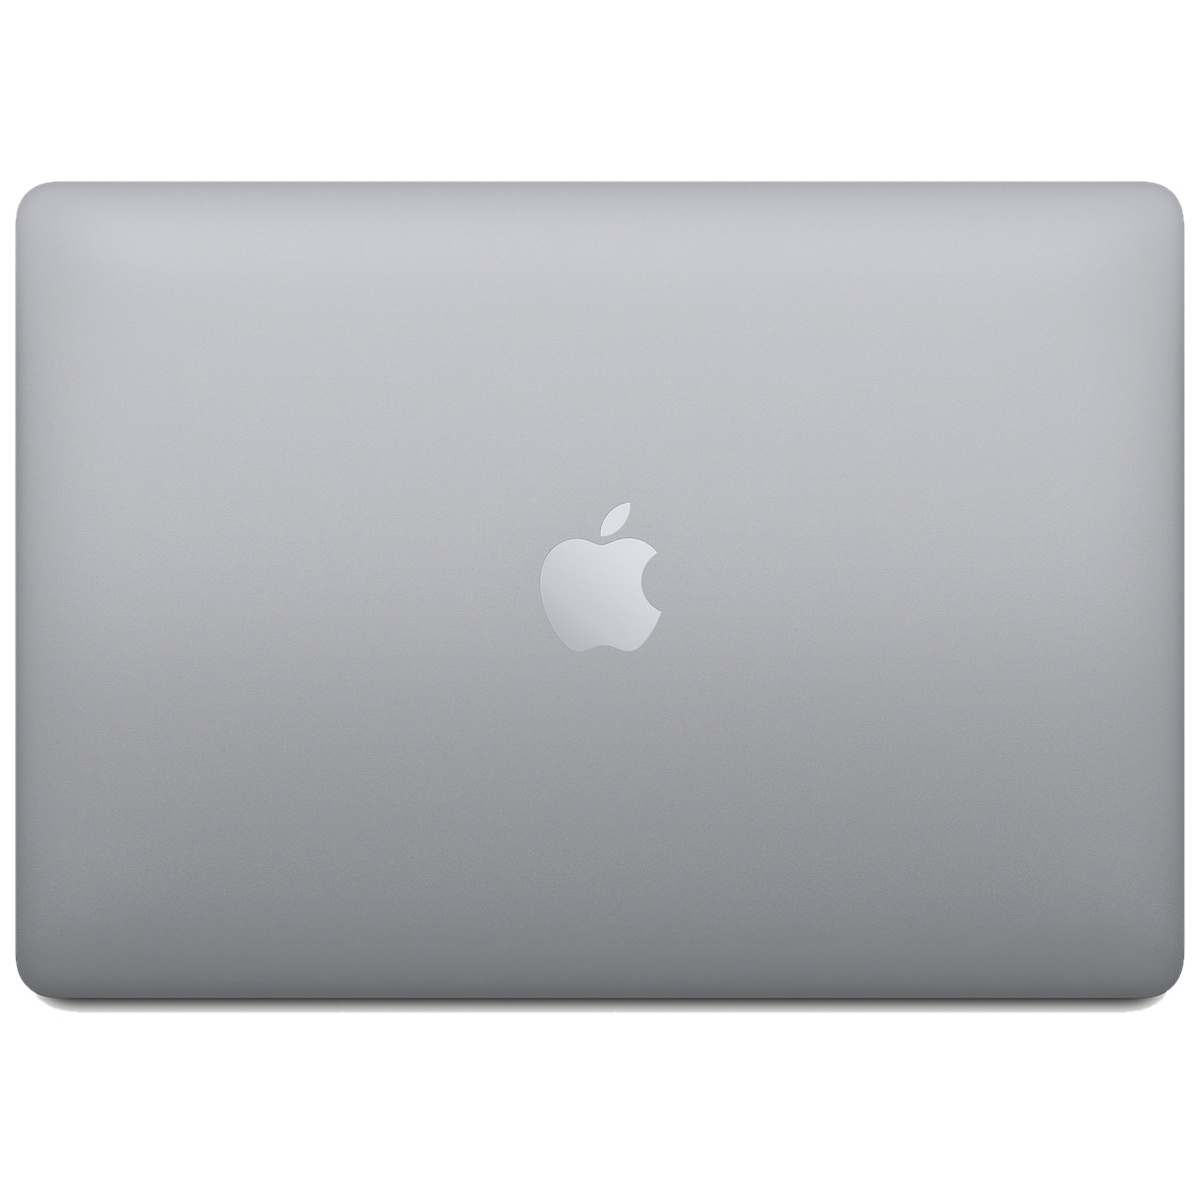 MacBook Pro13 256 2020 Late M1 Gray MYD82